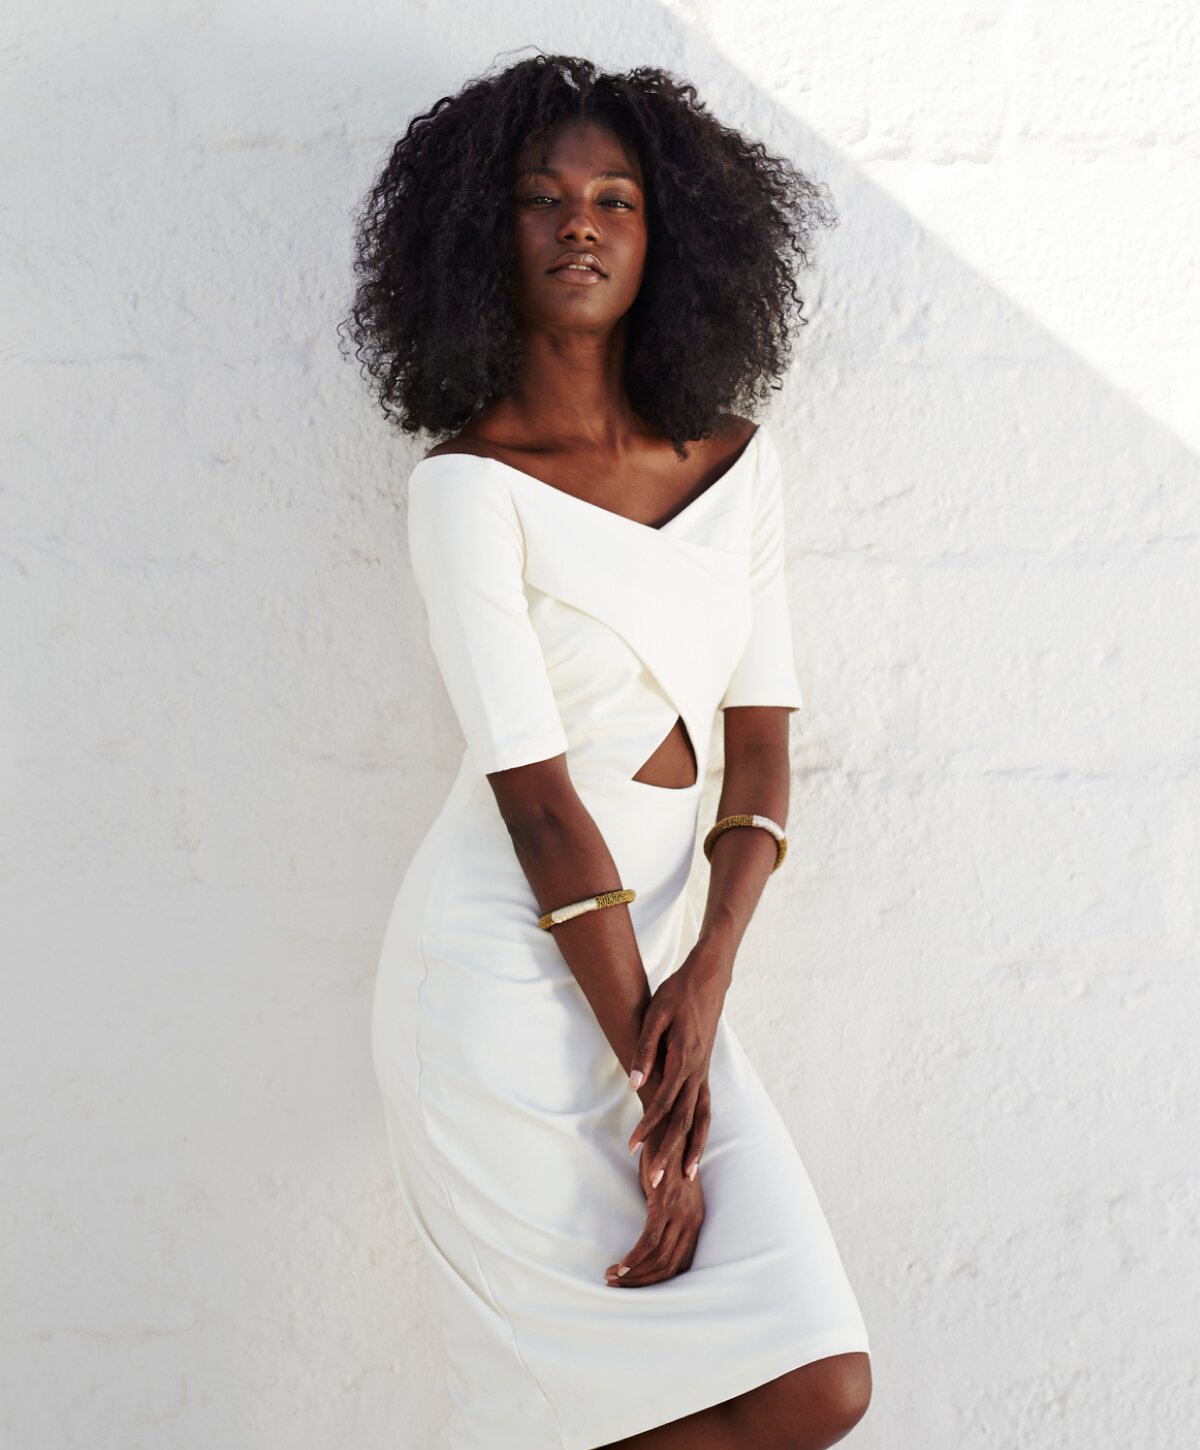 Los Angeles CoolSculpting elite model in white dress